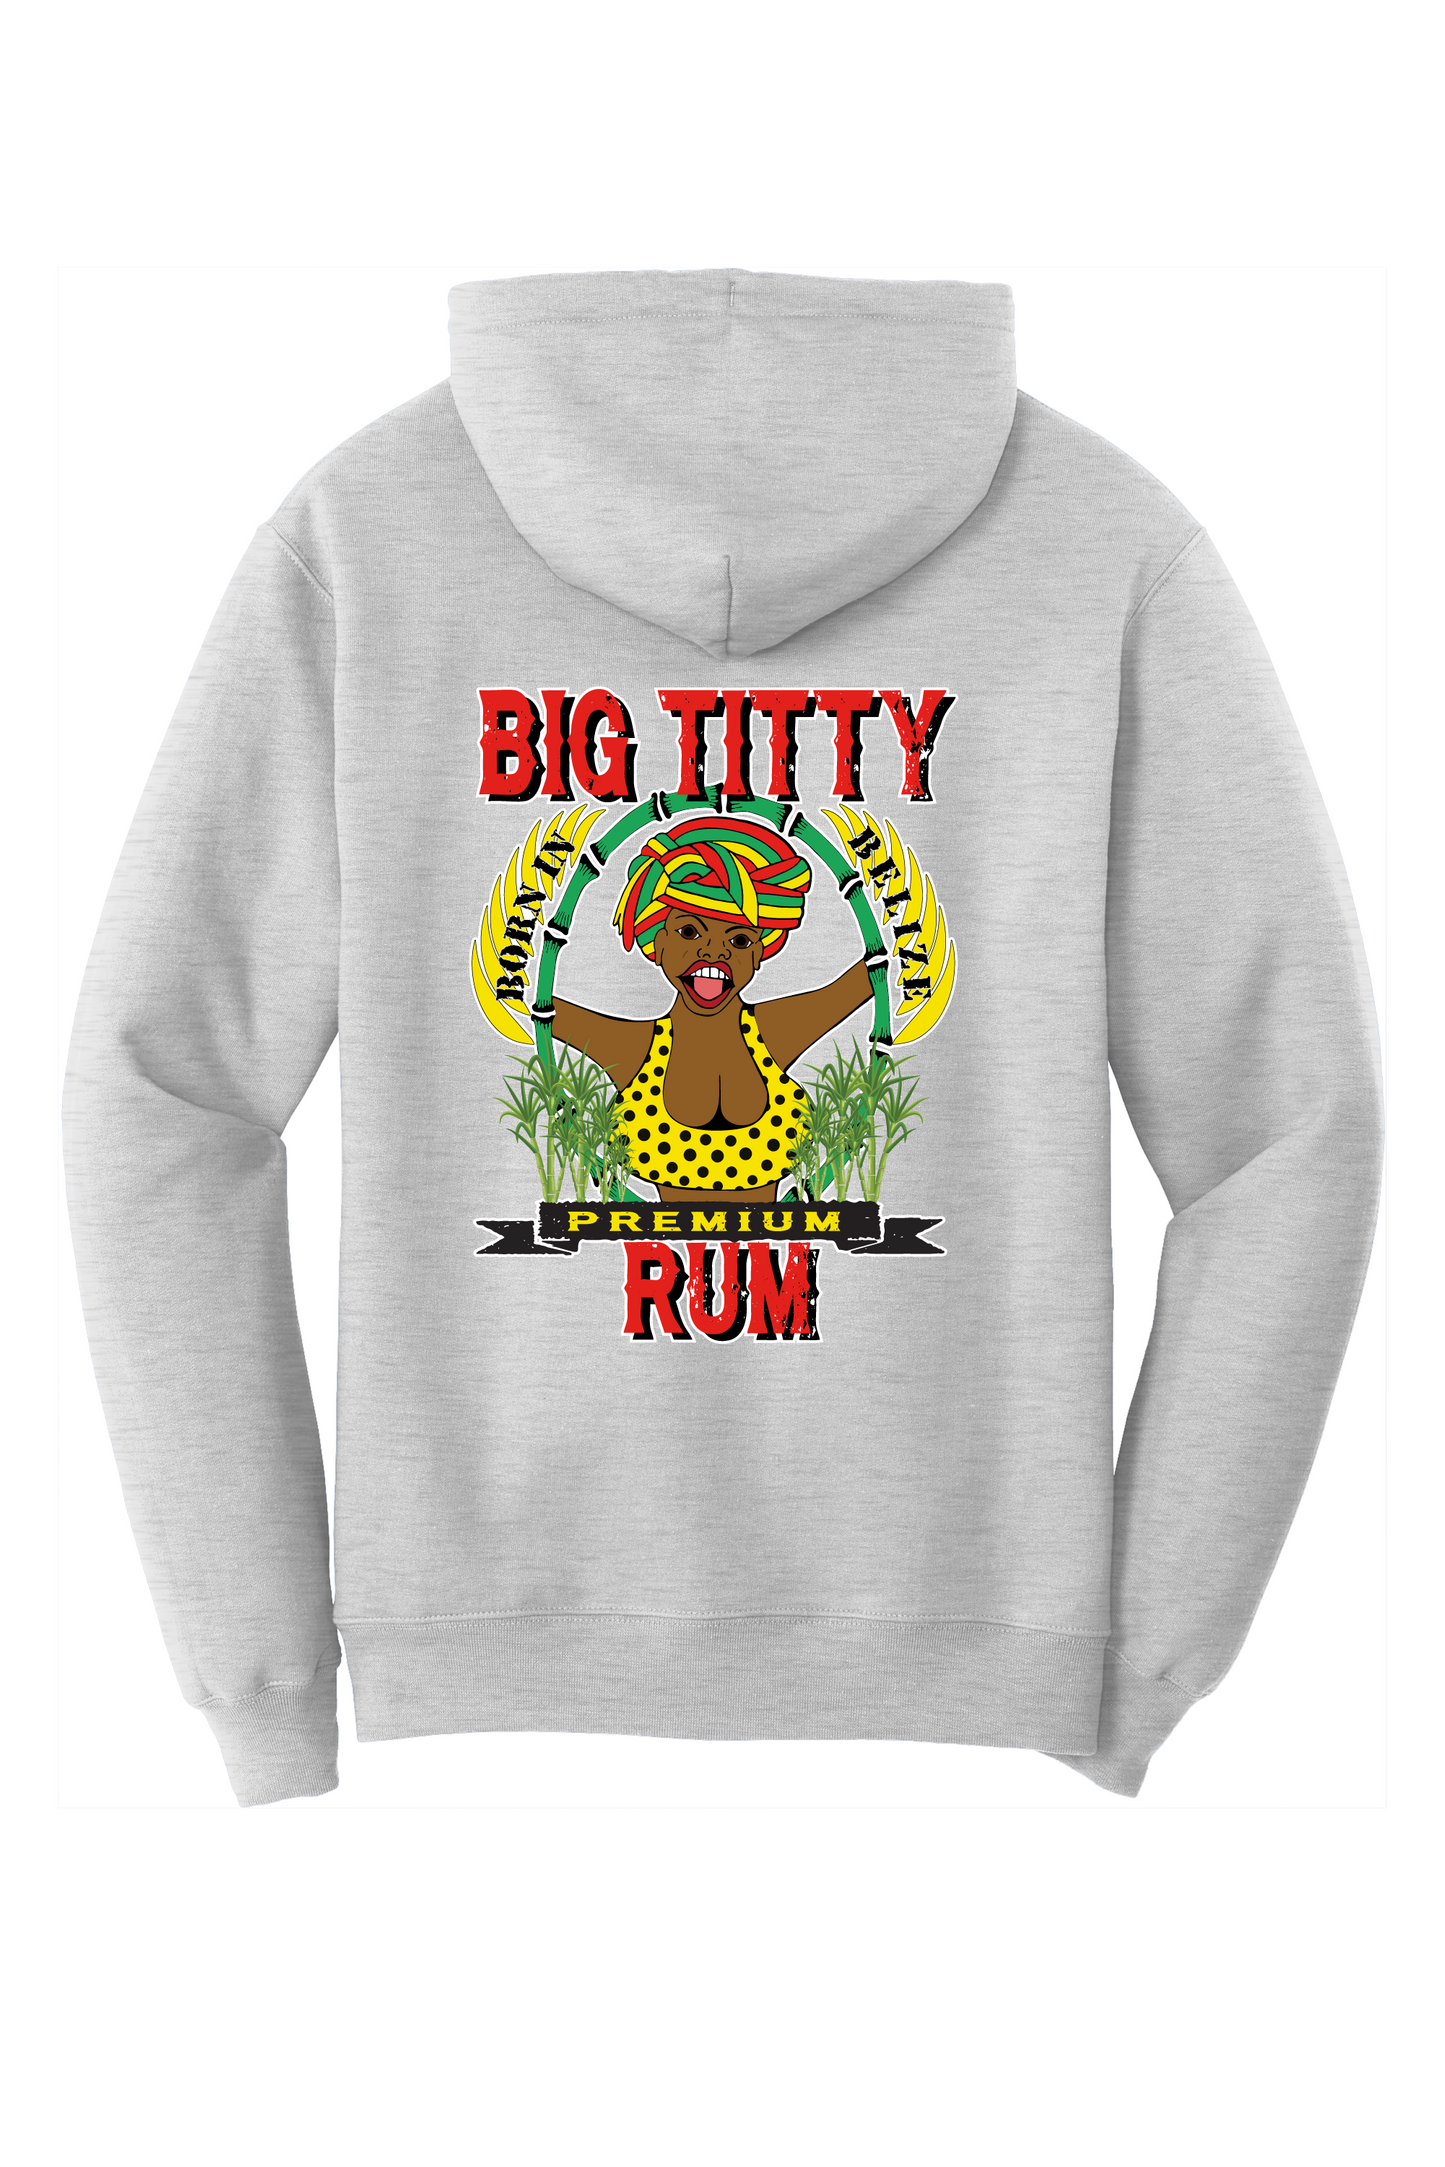 Big Titty Rum Hoodie logo on back